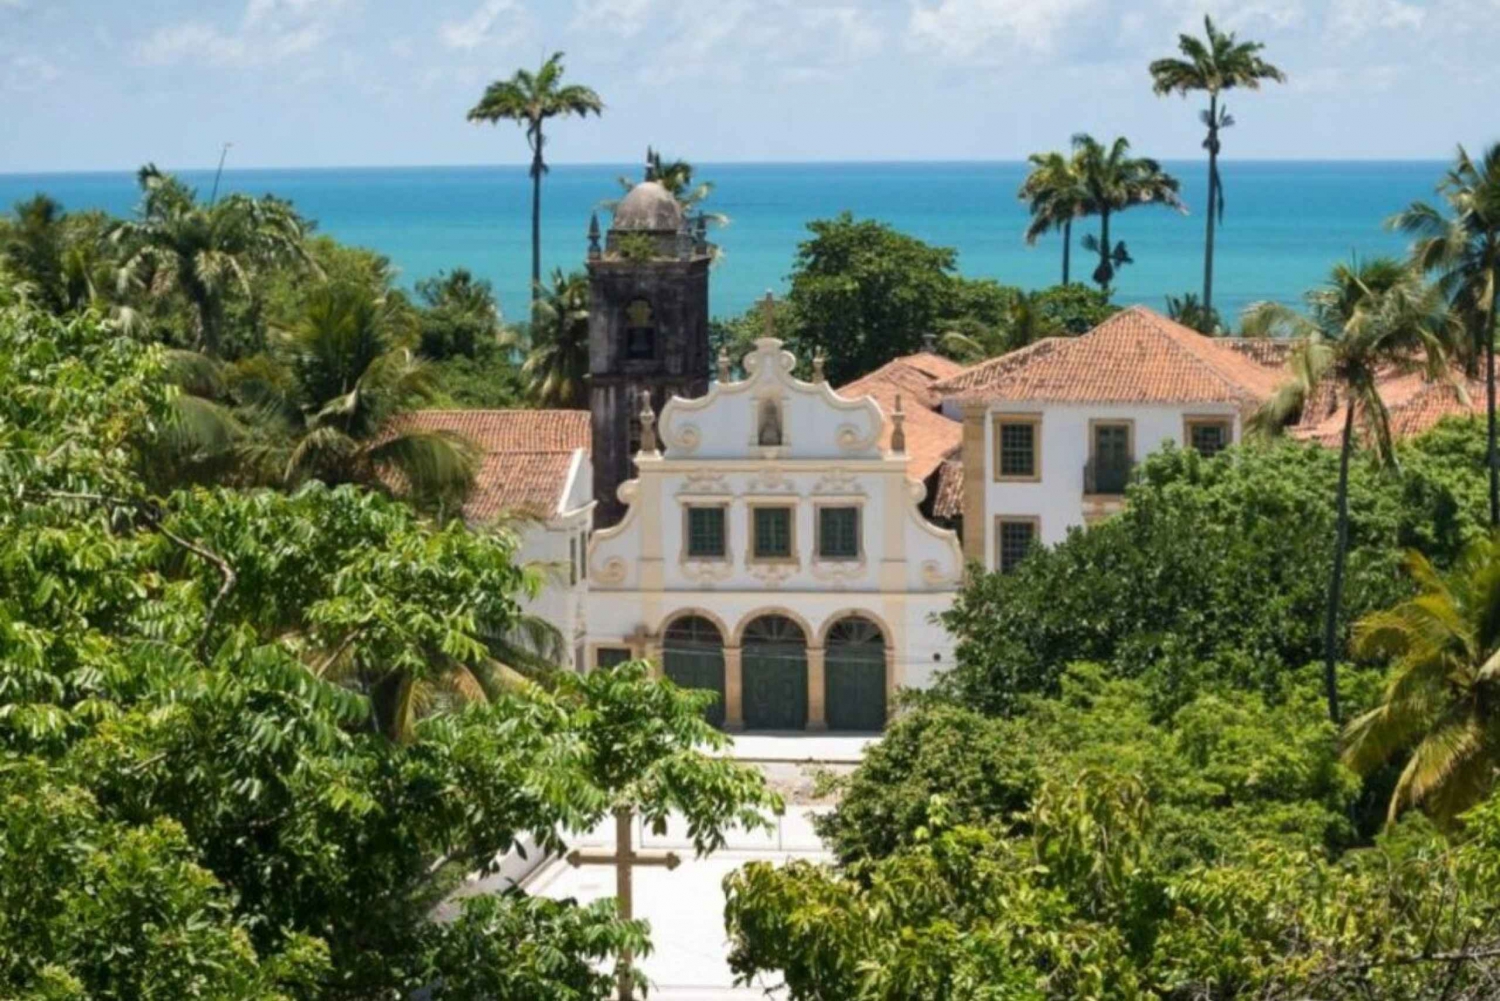 Boa Viagem tai Piedade: Olinda ja Recife Antigo -päiväretki